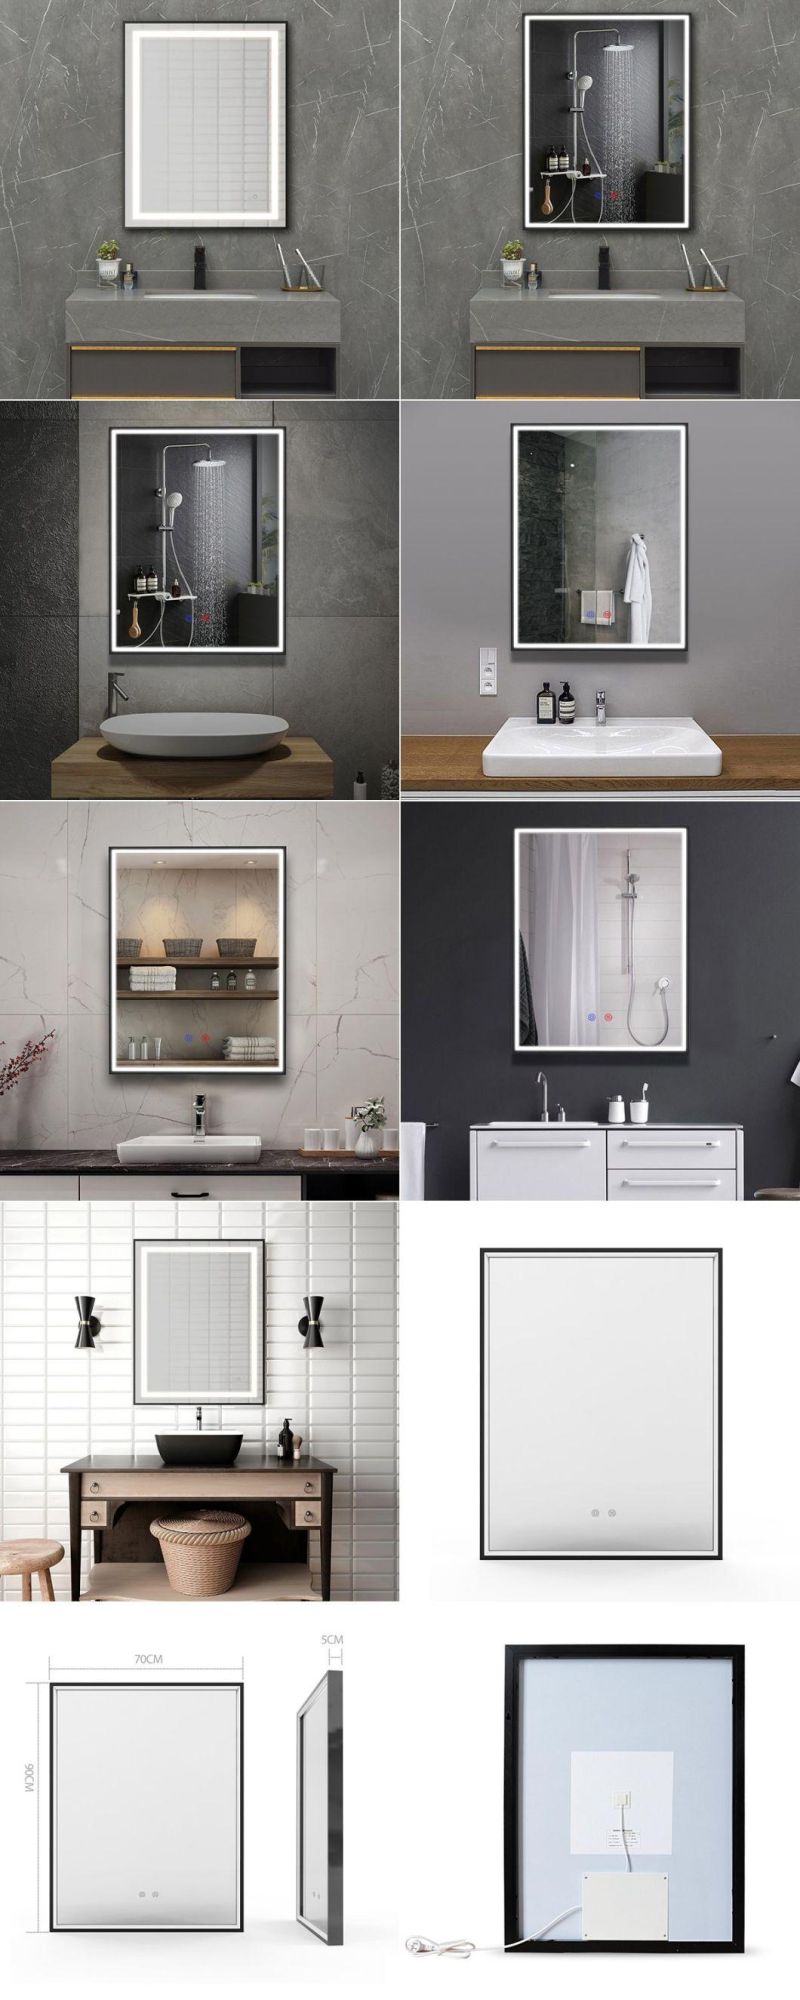 Wholesale Luxury Home Decorative Rectangle Black Aluminum Frame Smart Mirror Wholesale LED Bathroom Backlit Wall Glass Vanity Mirror